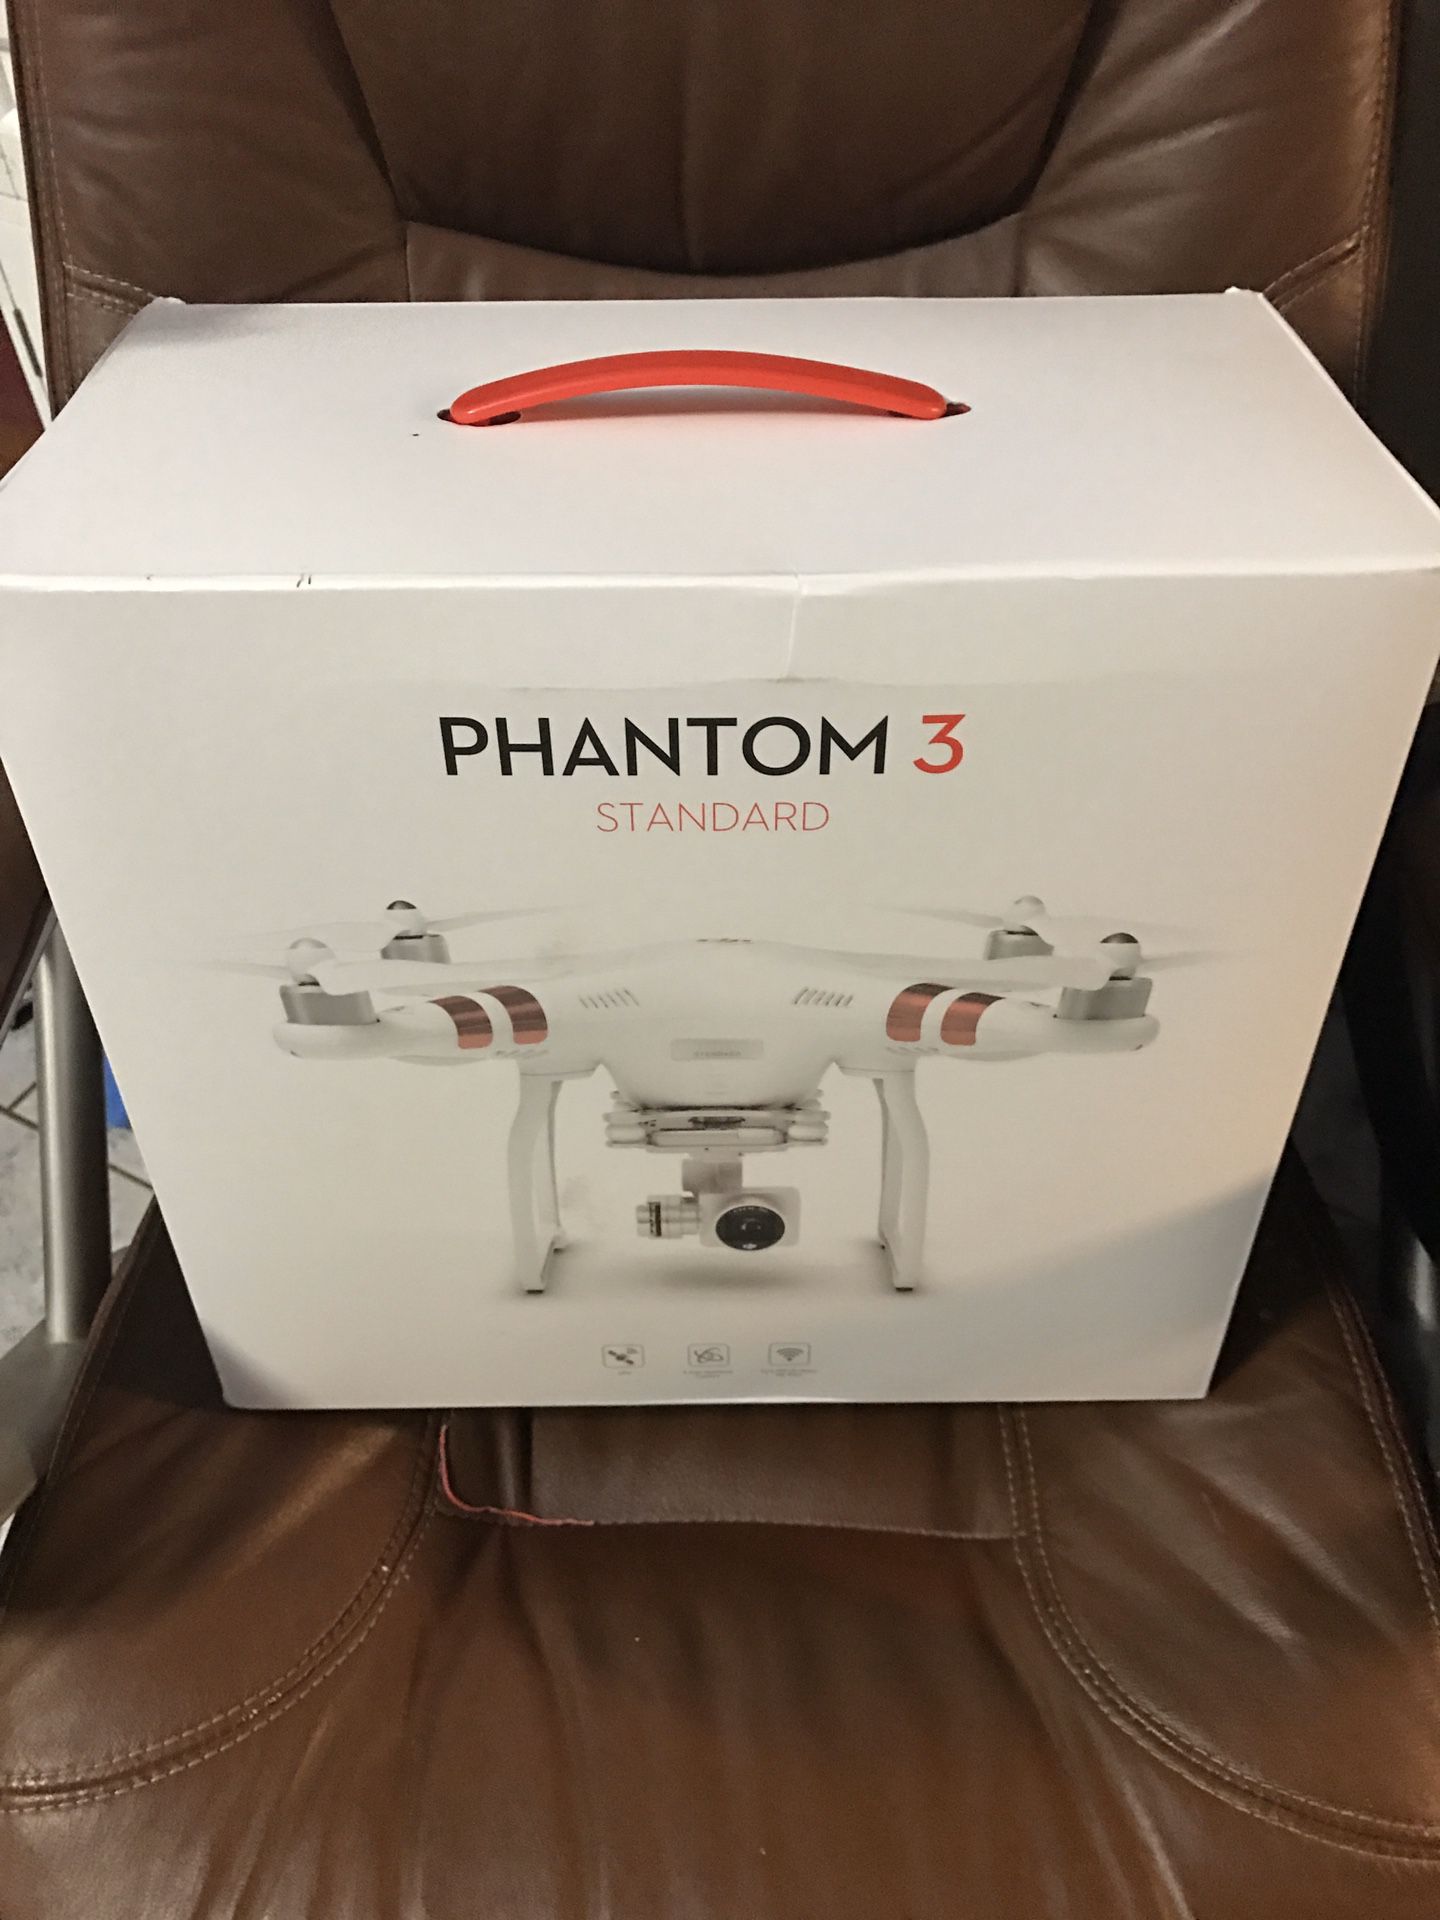 Phantom 3 in box